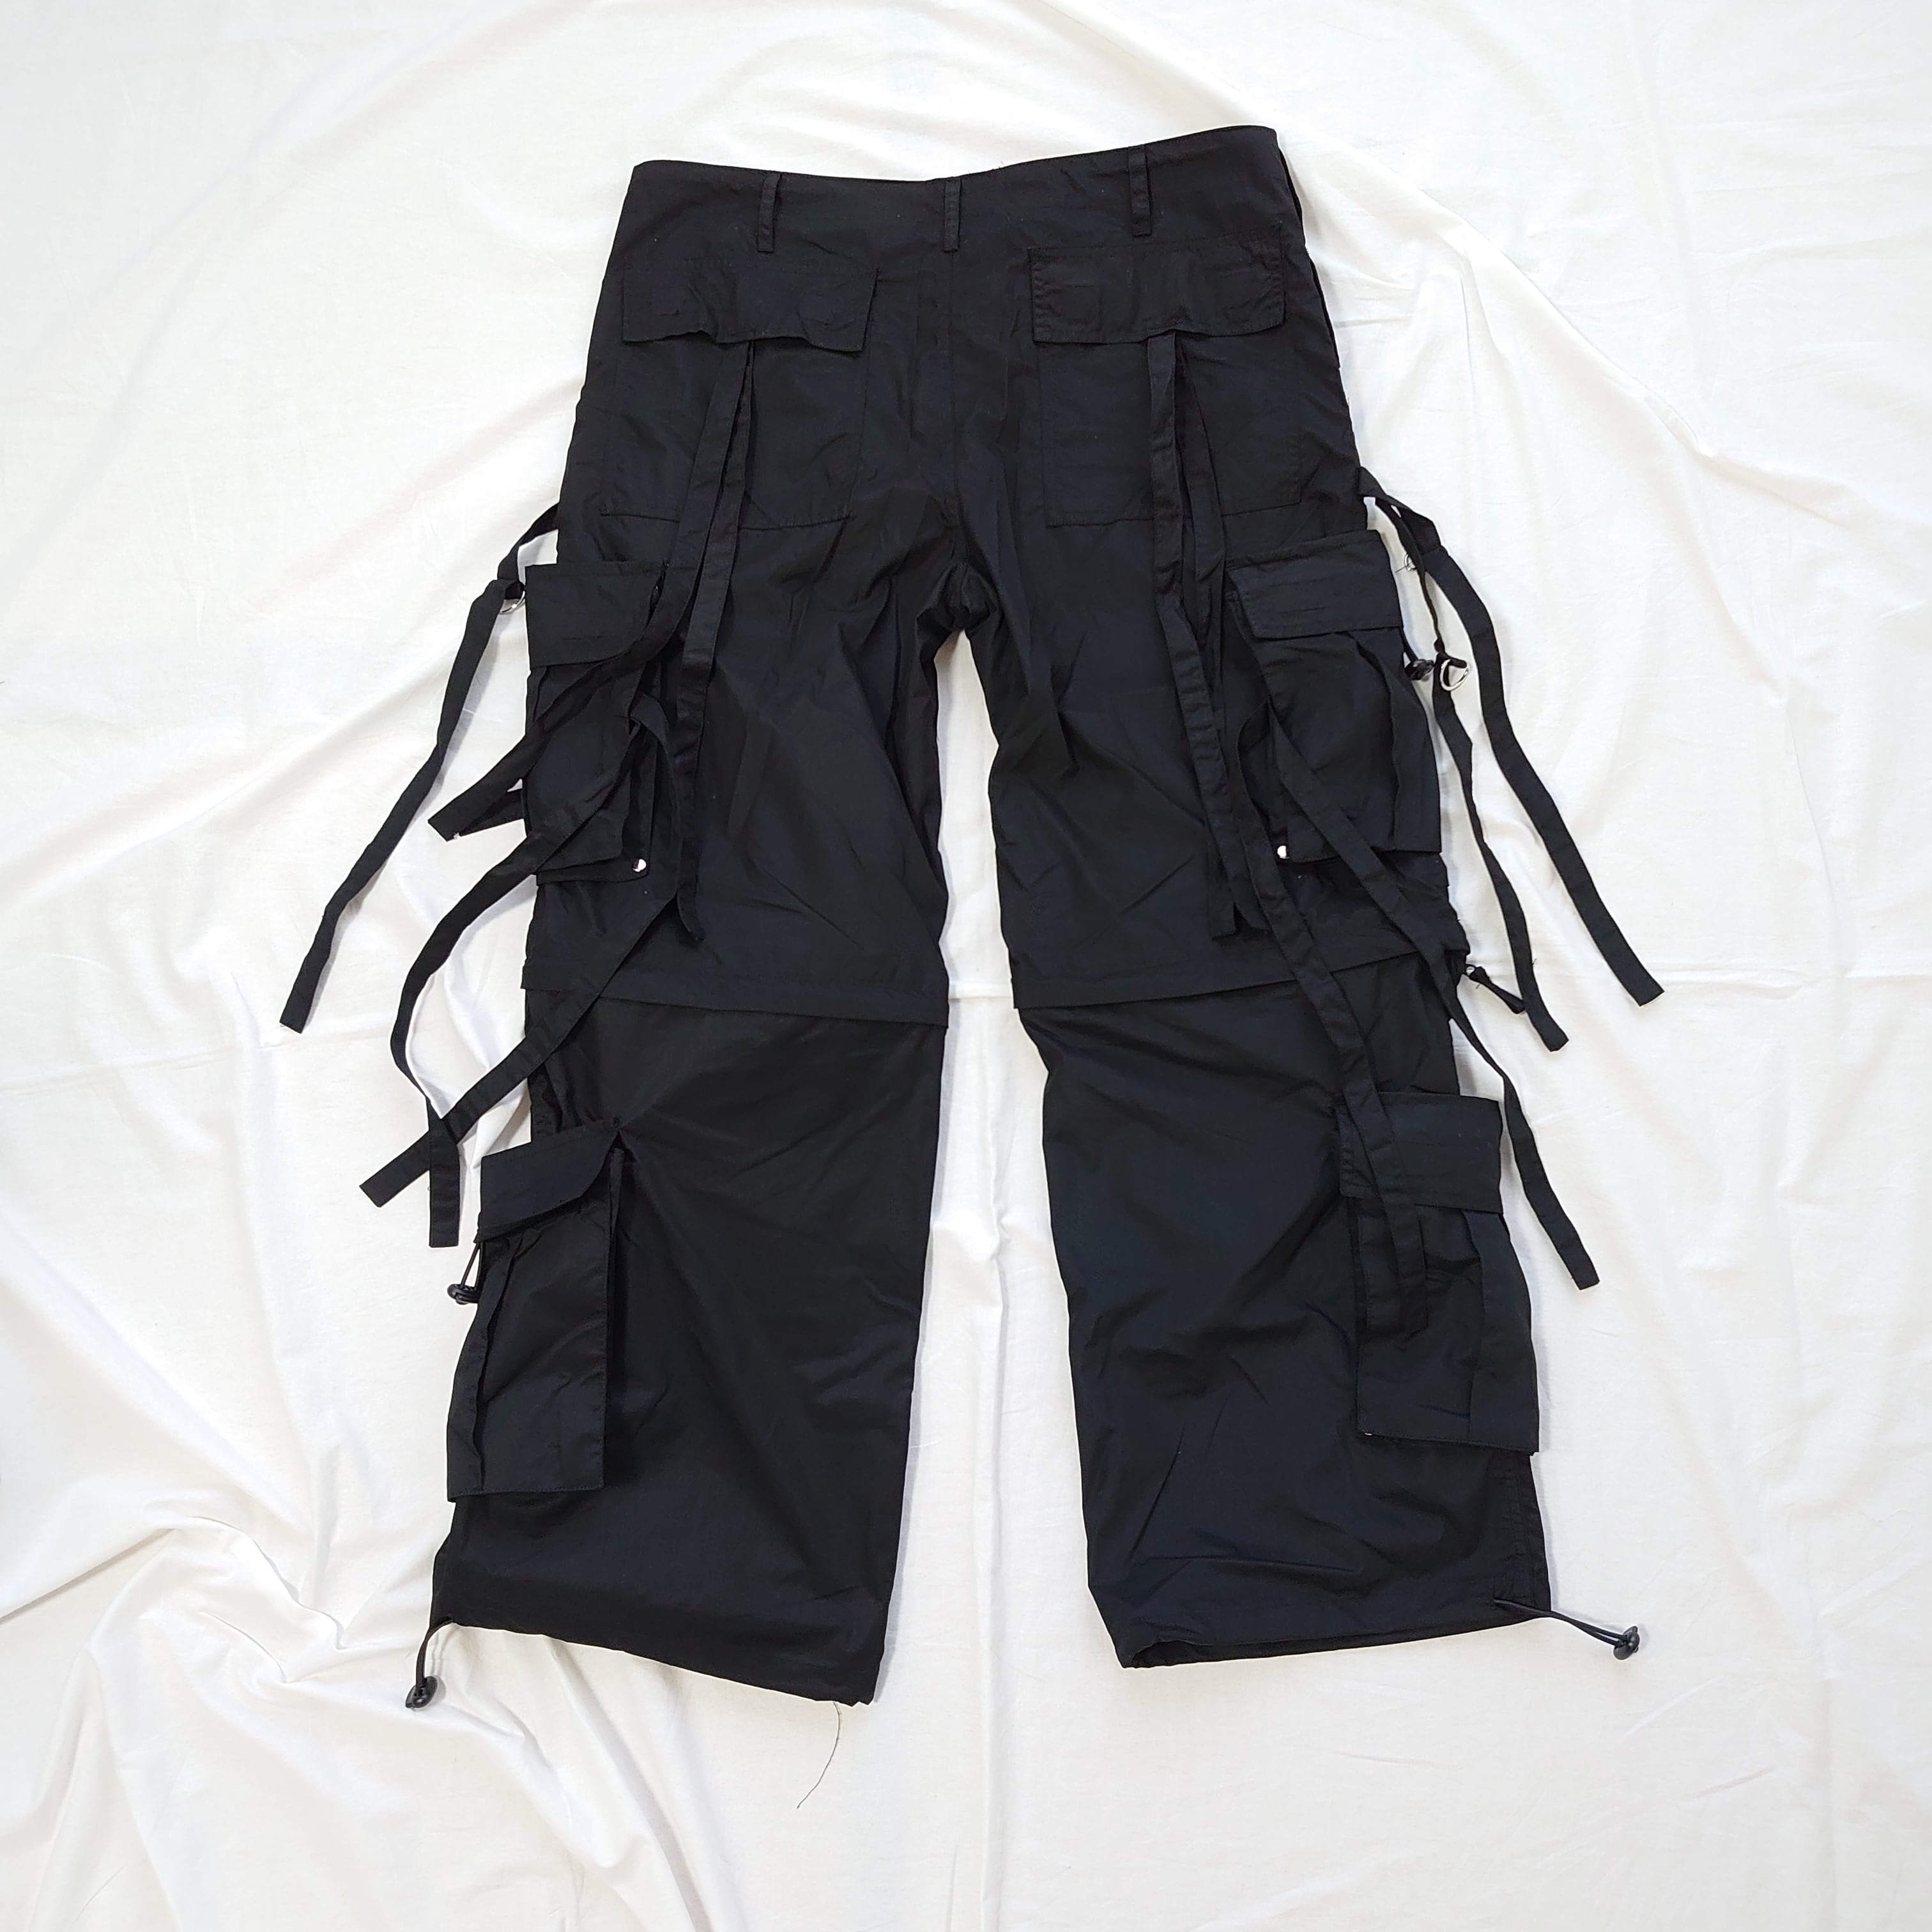 00's military UK techno pants black